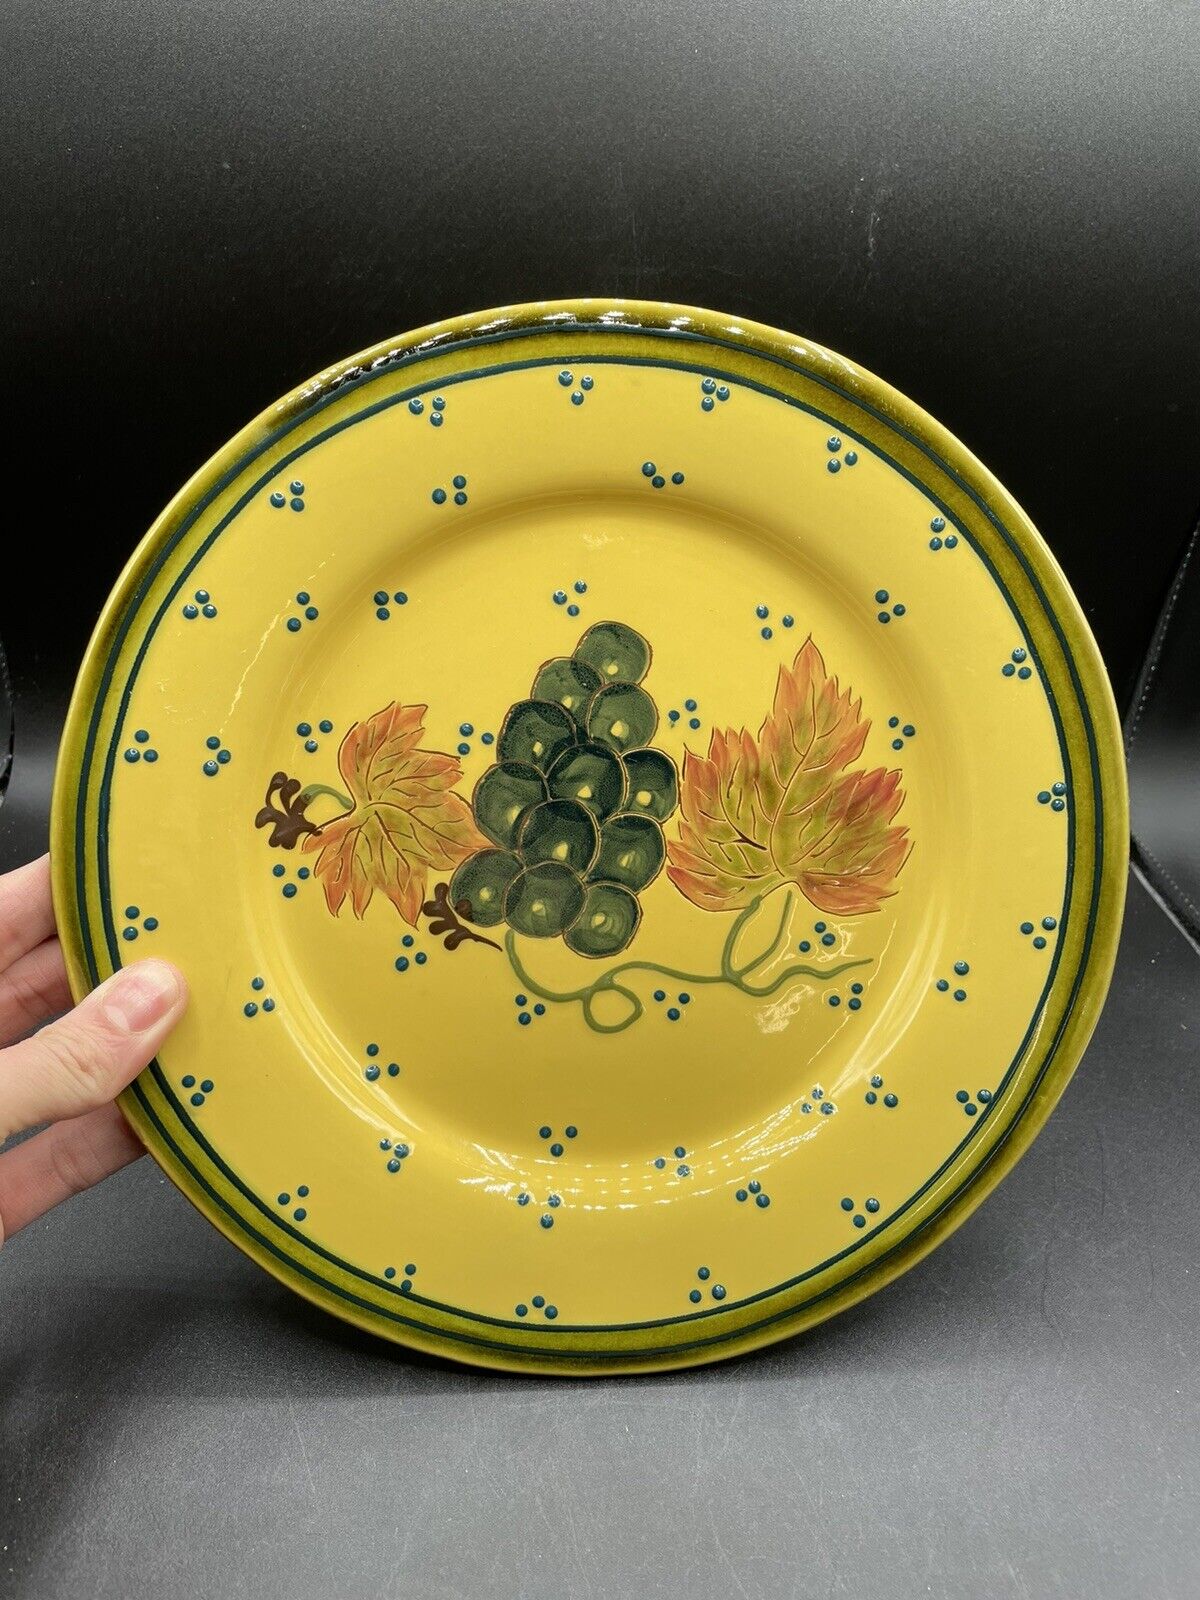 BLUE RIDGE DESIGNS dinner plates w/ grape & leaves design Yellow ware